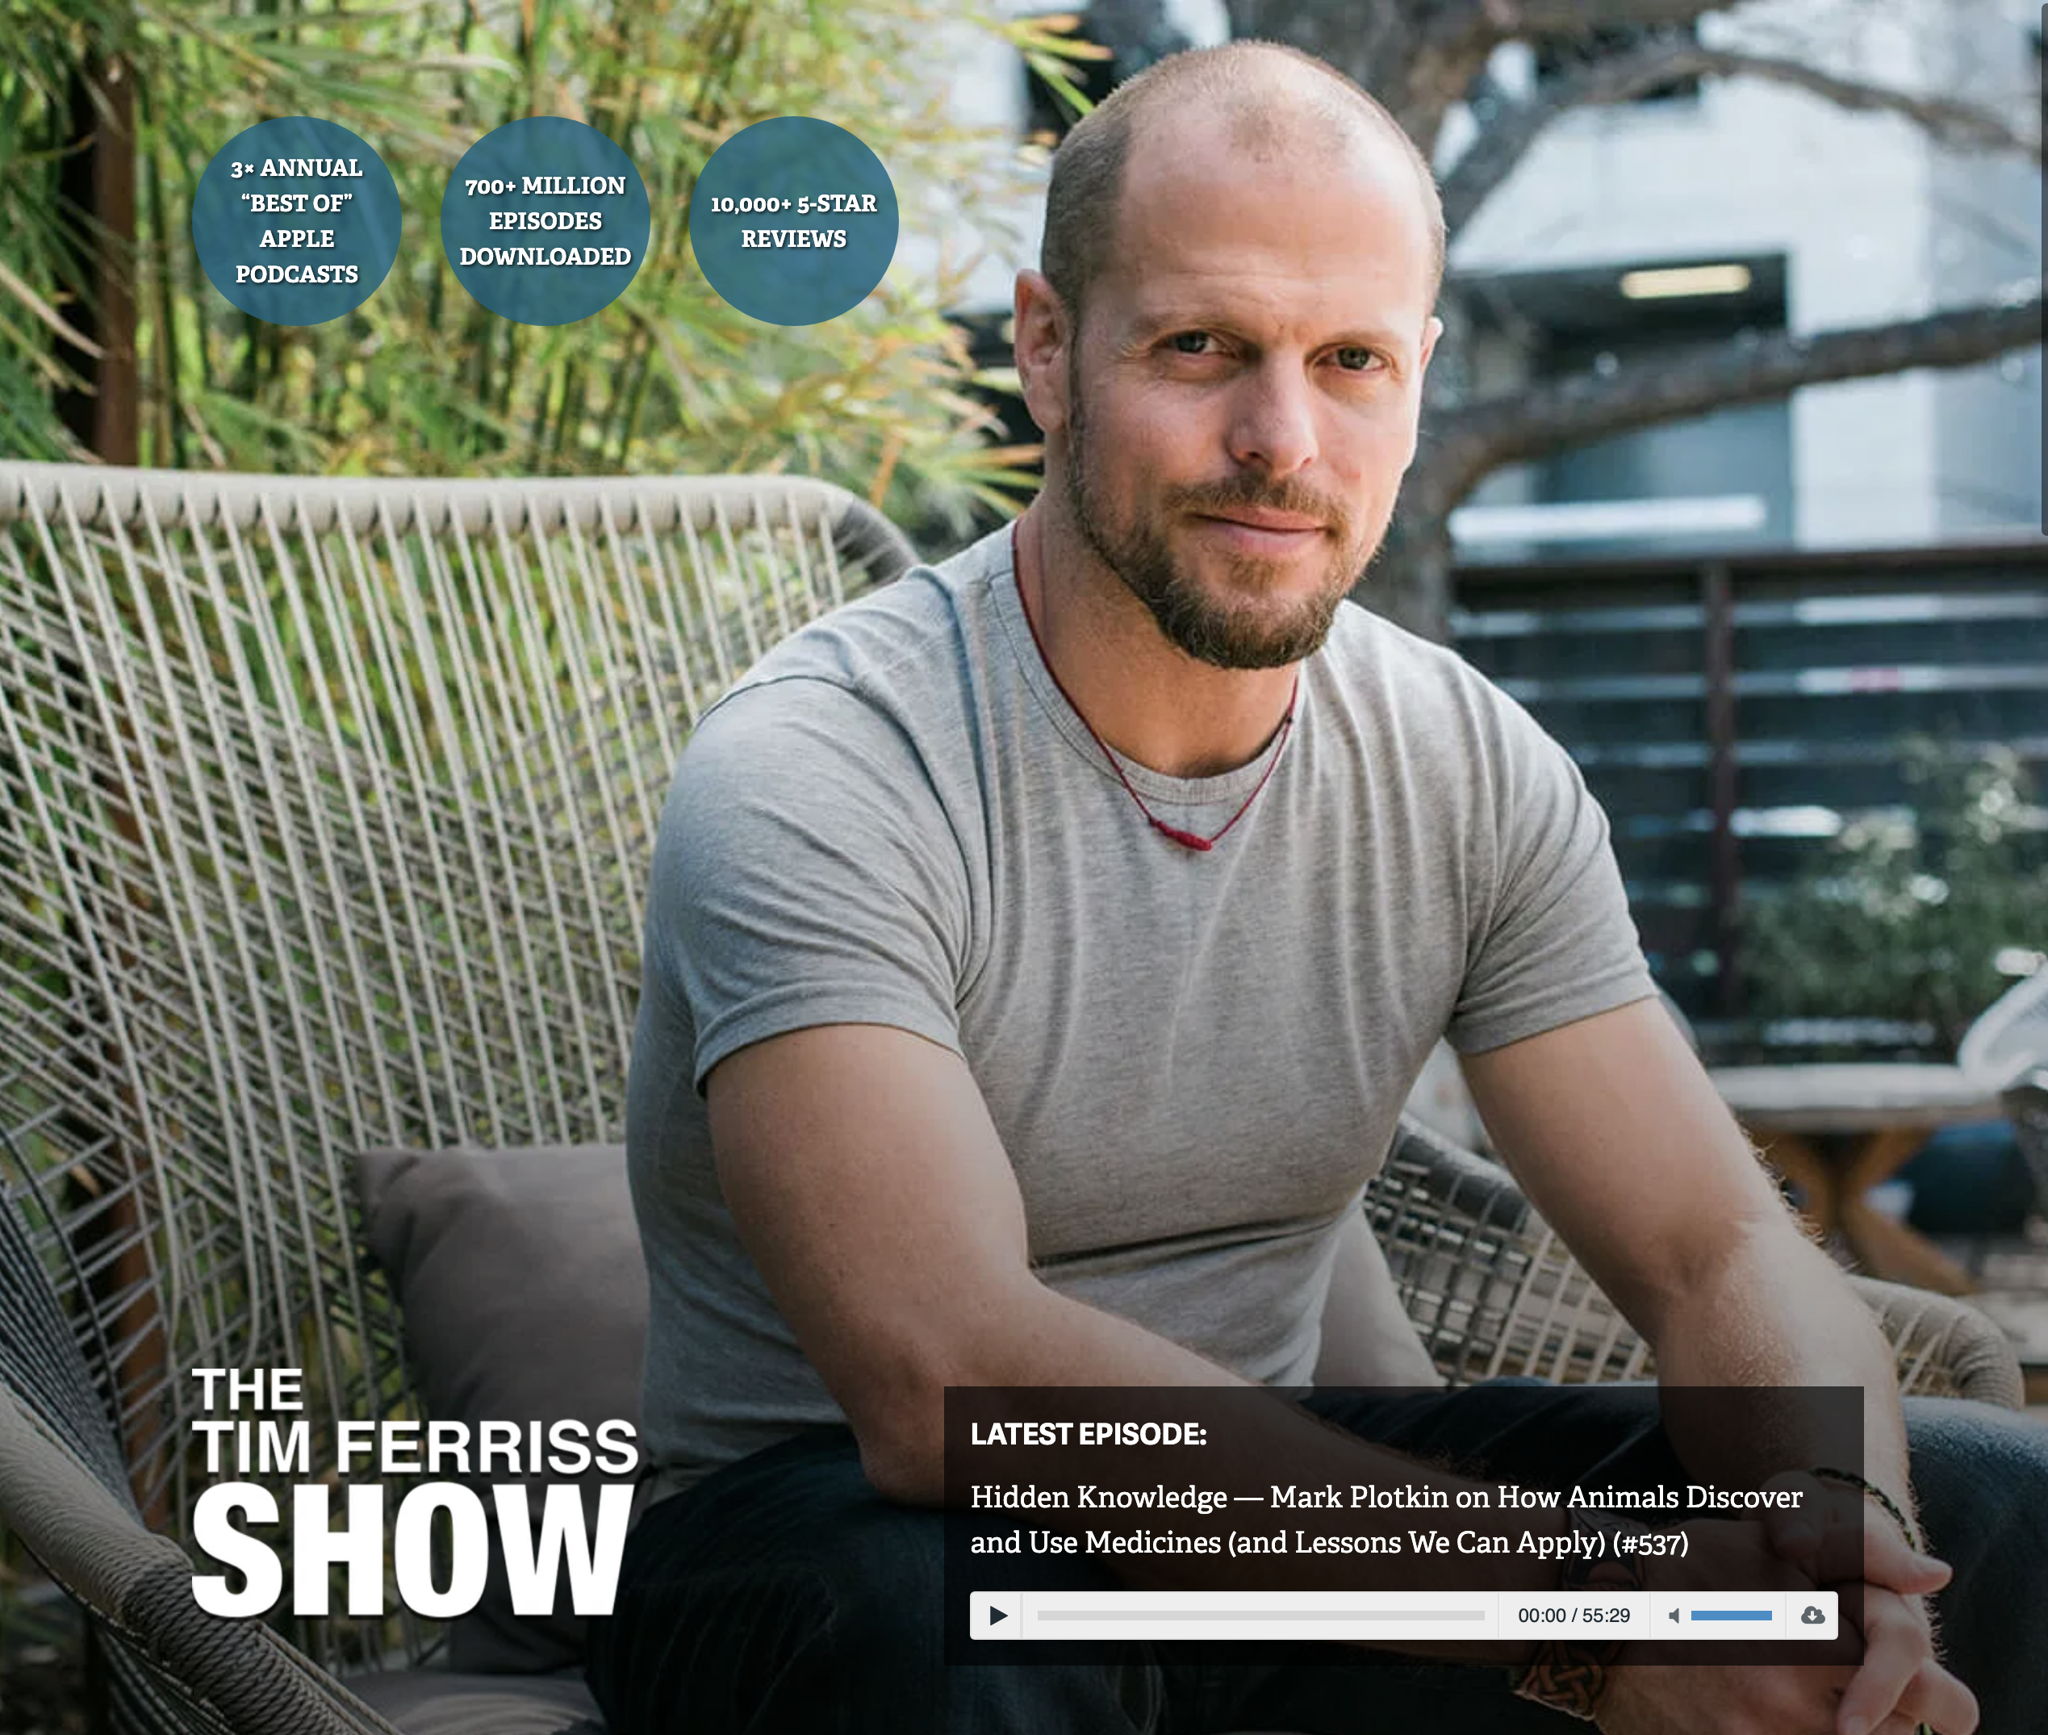 The Tim Ferriss Show